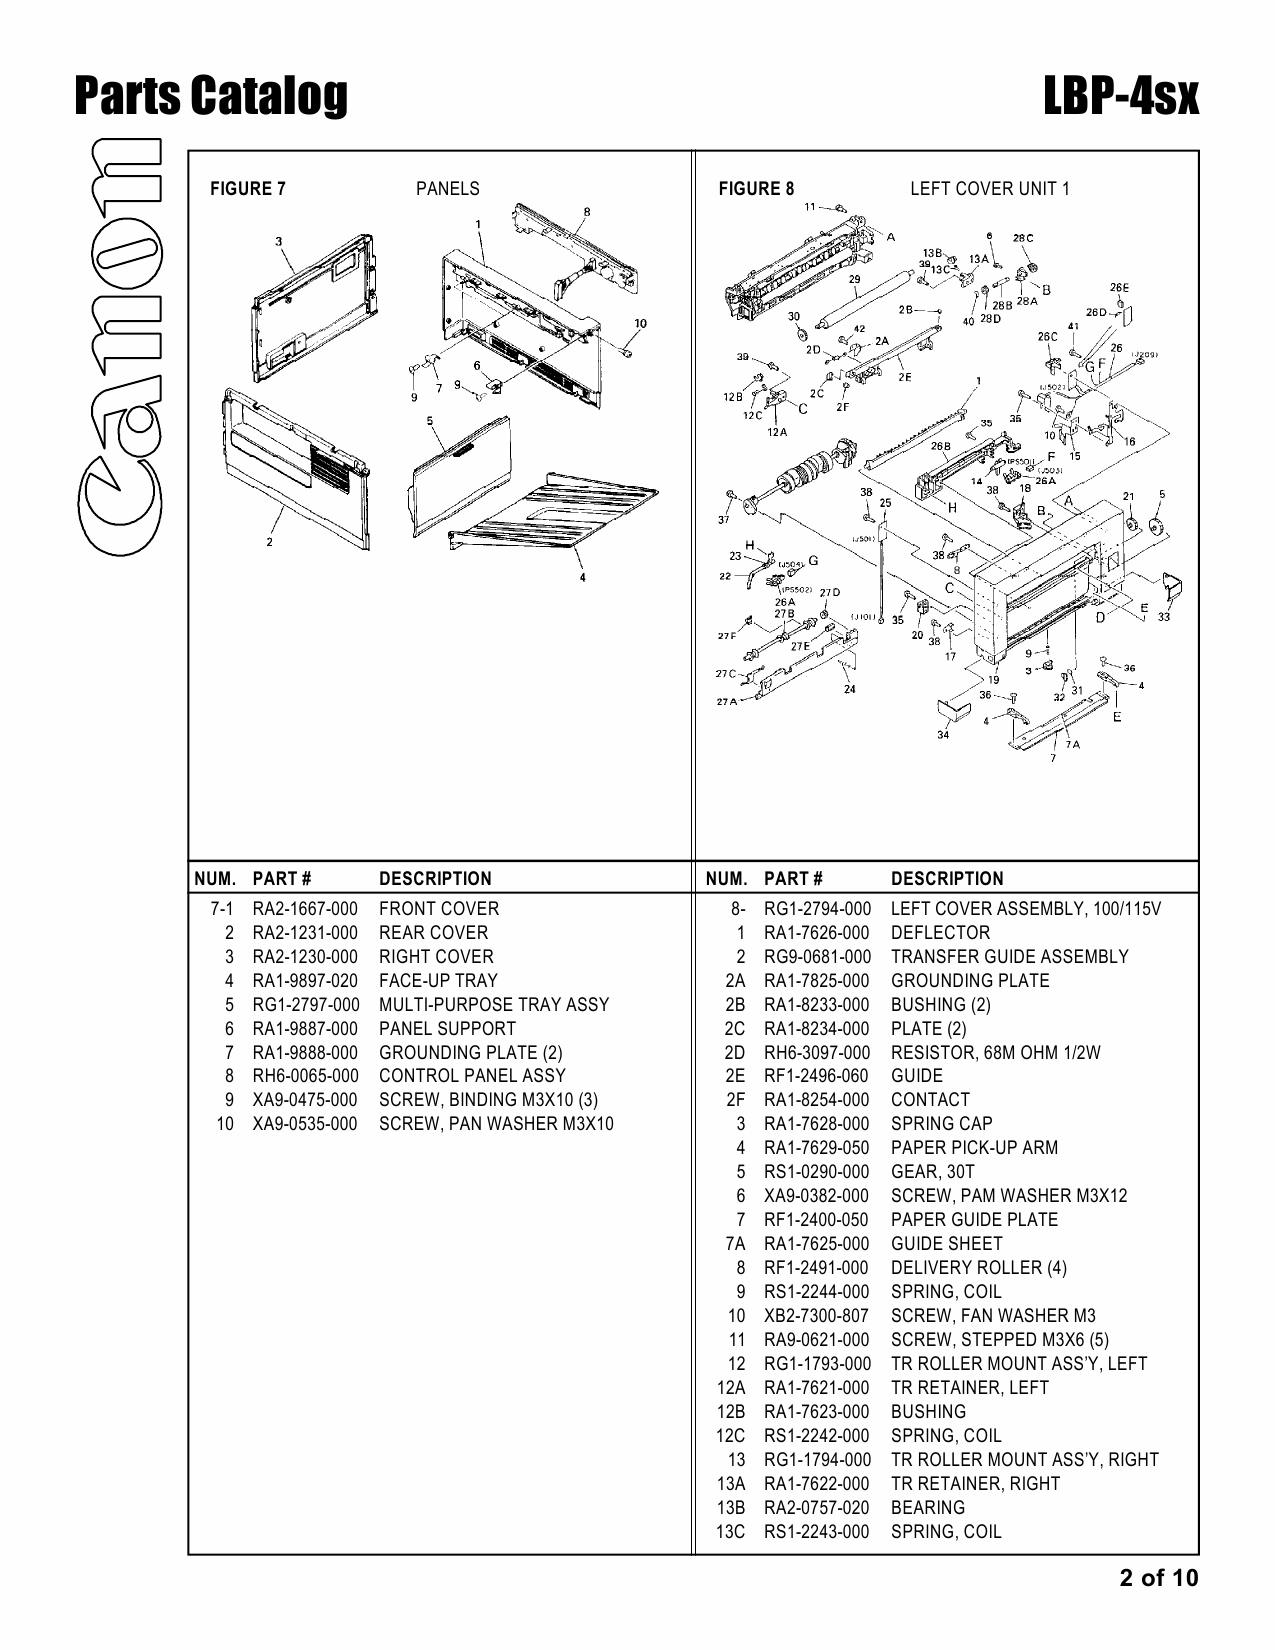 Canon imageCLASS LBP-4sx Parts Catalog Manual-2